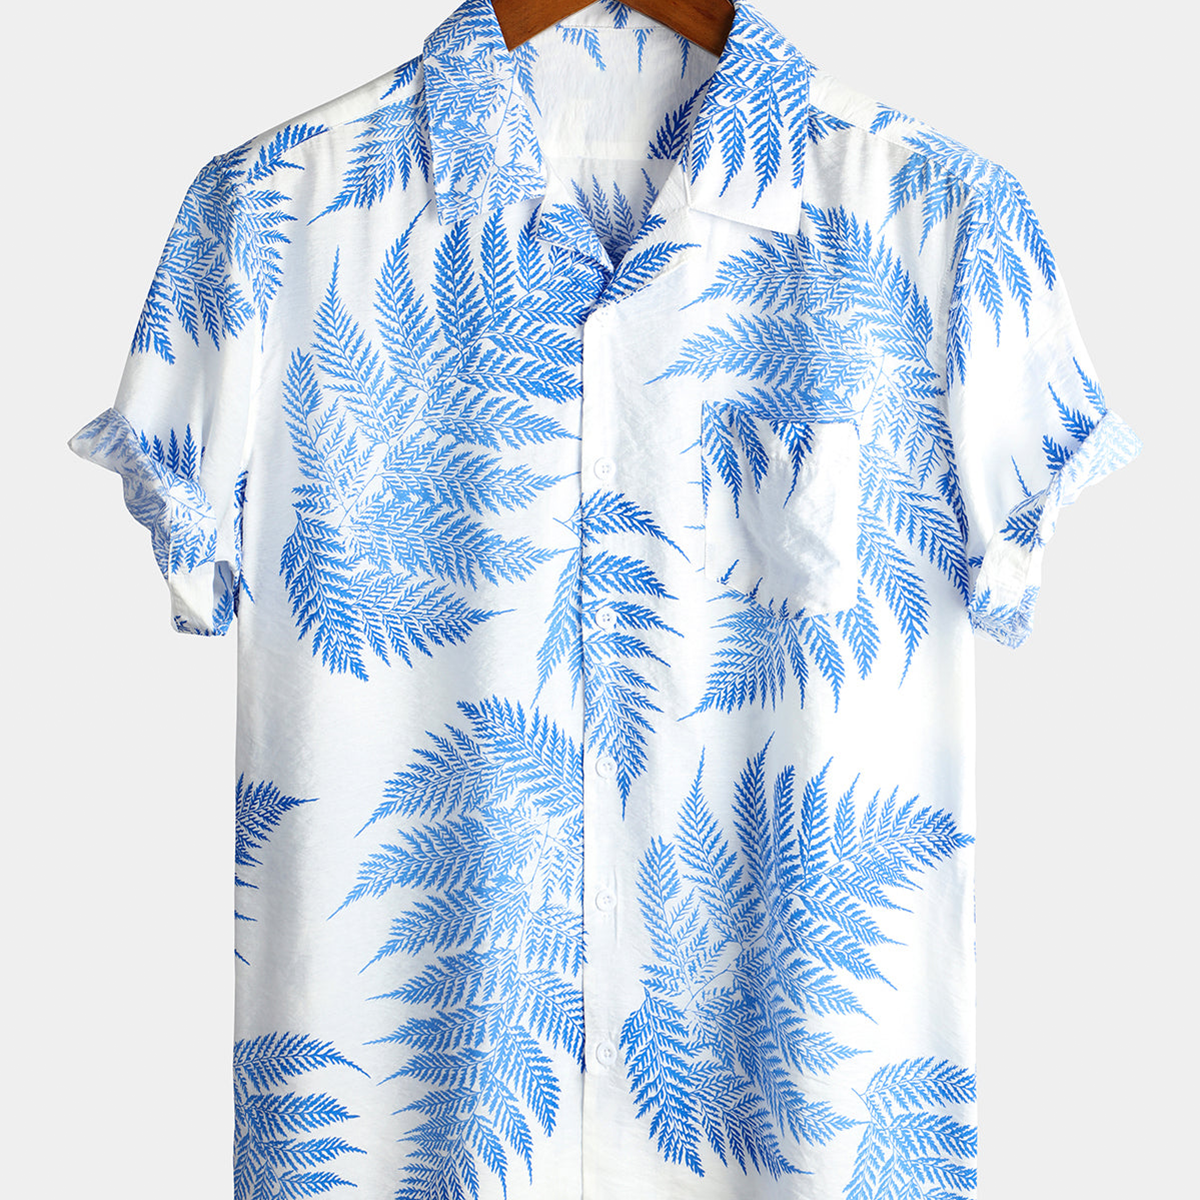 Men's Tropical Leaf Print Hawaiian Pocket Collared Top Cotton Button Up Short Sleeve Shirt